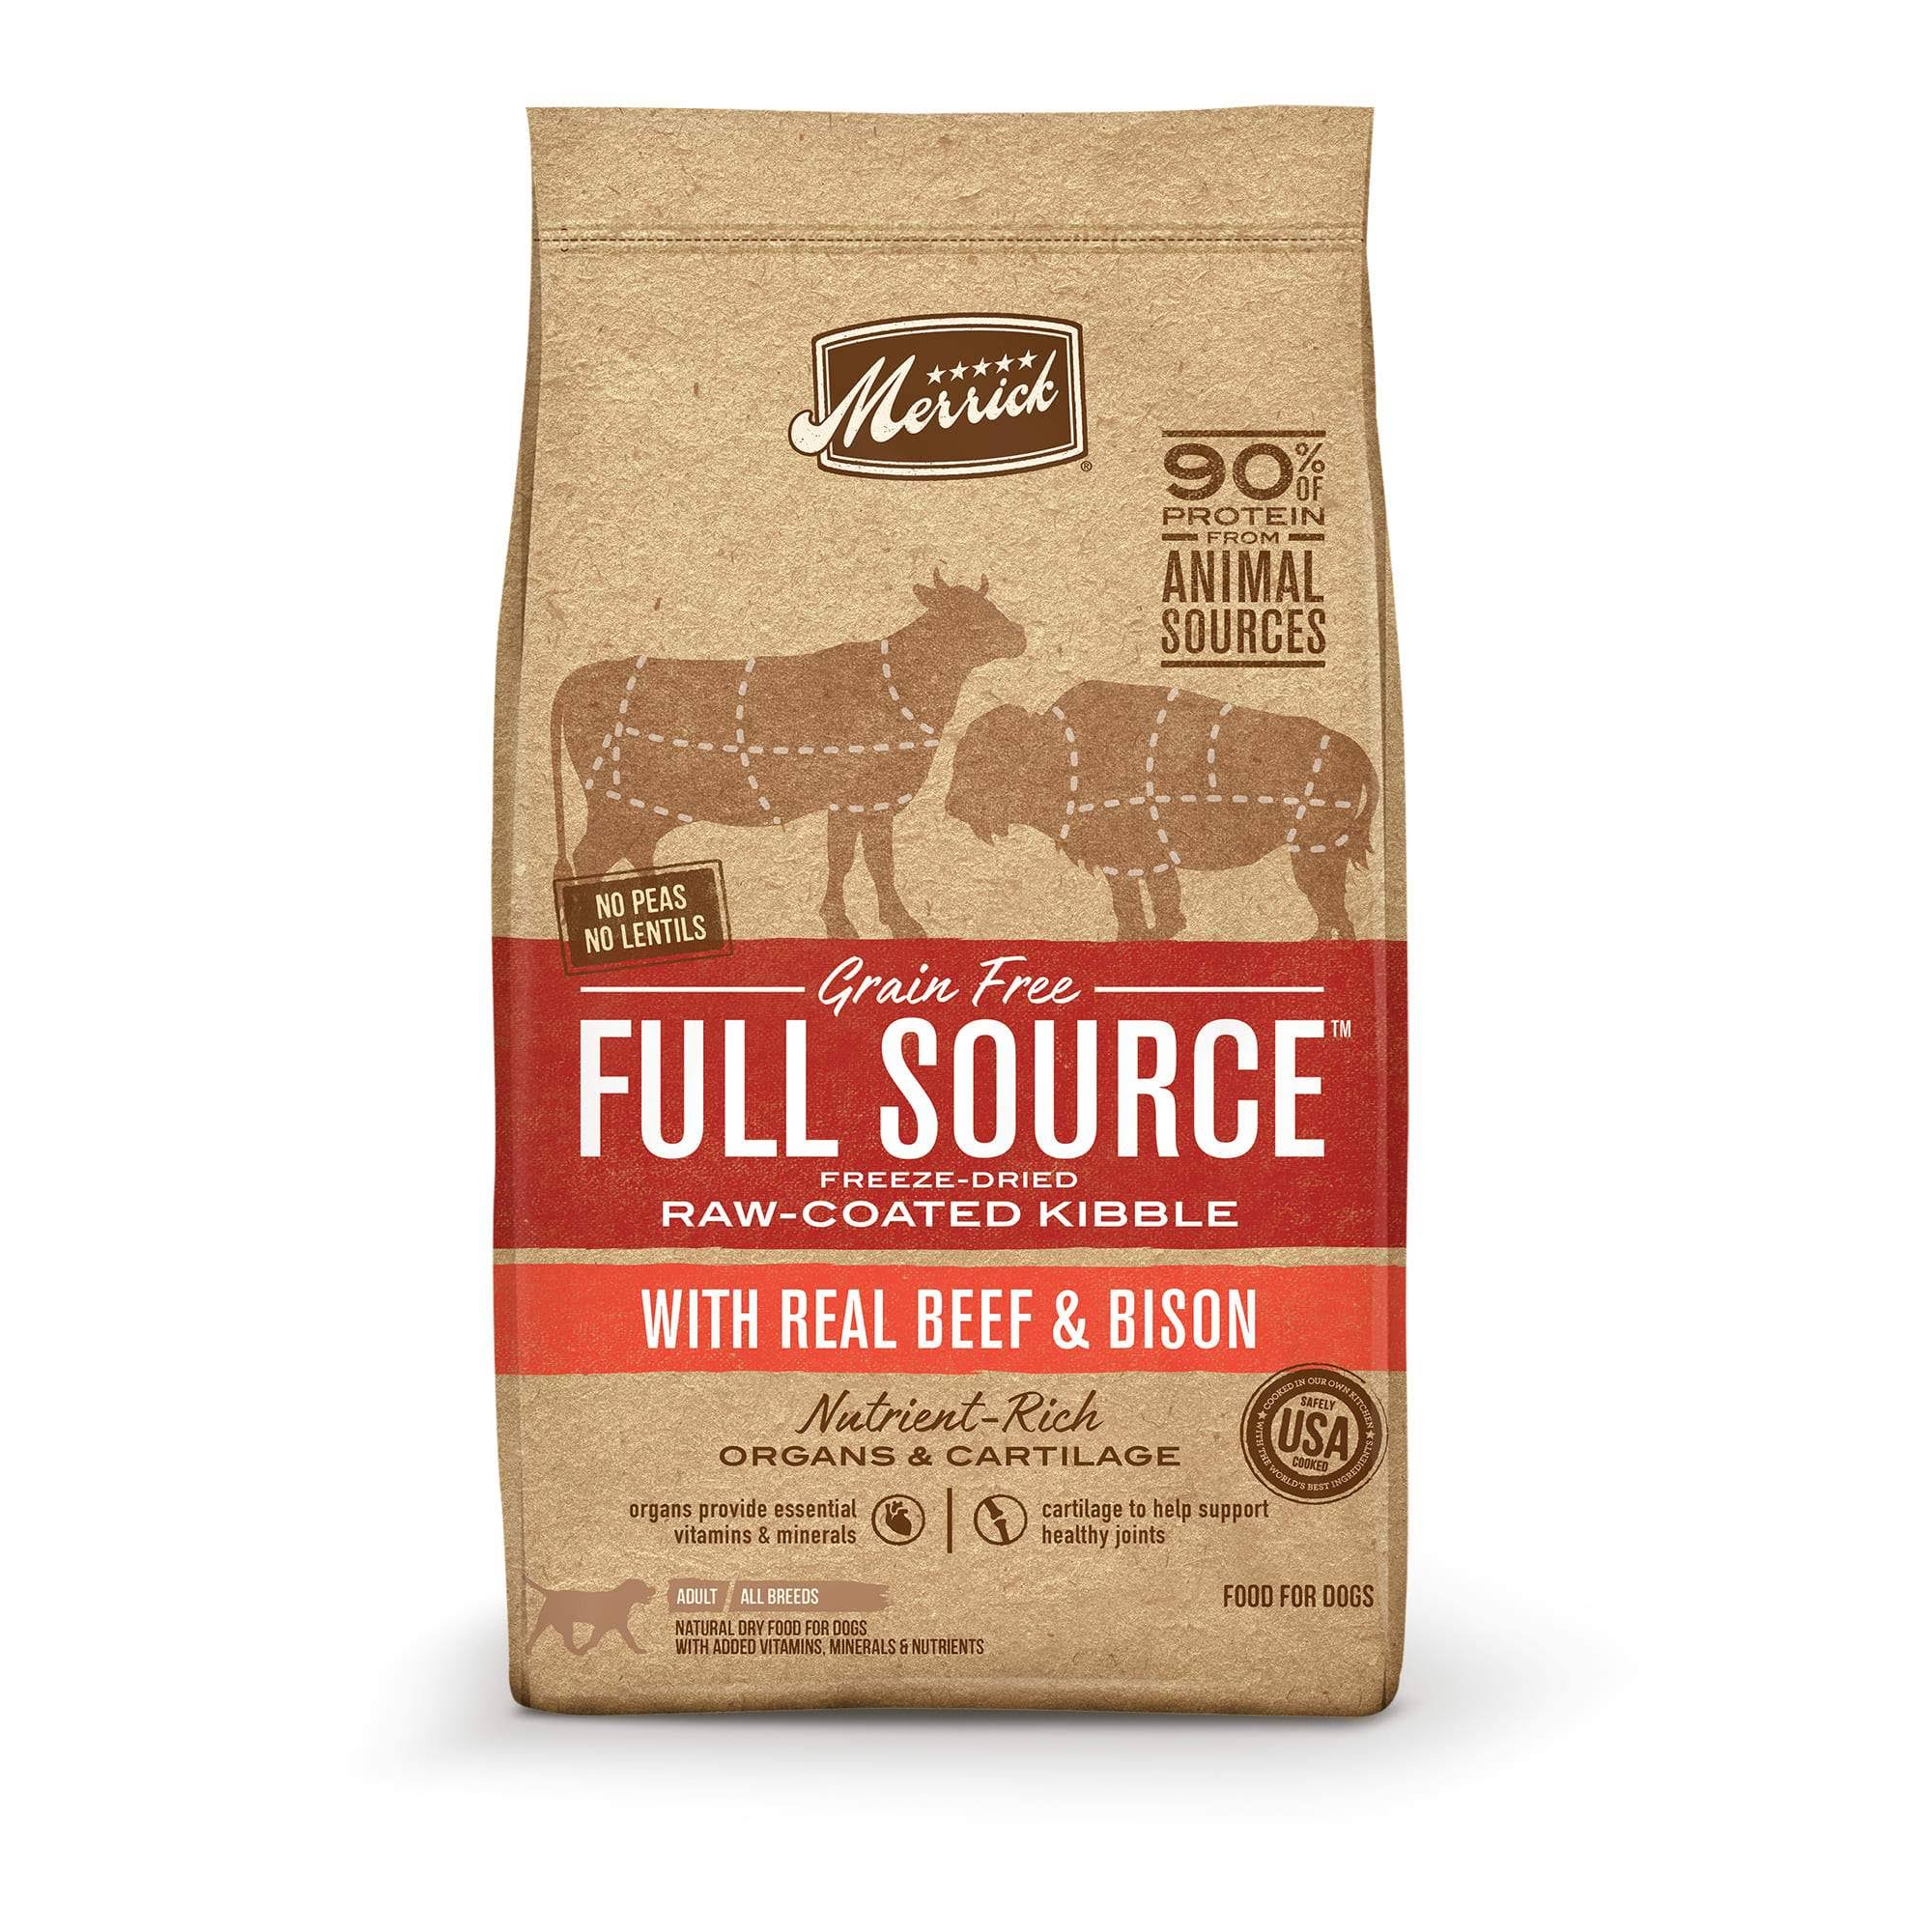 Merrick Full Source Grain-Free Raw-Coated Kibble with Real Beef & Bison - 20 lb. Bag